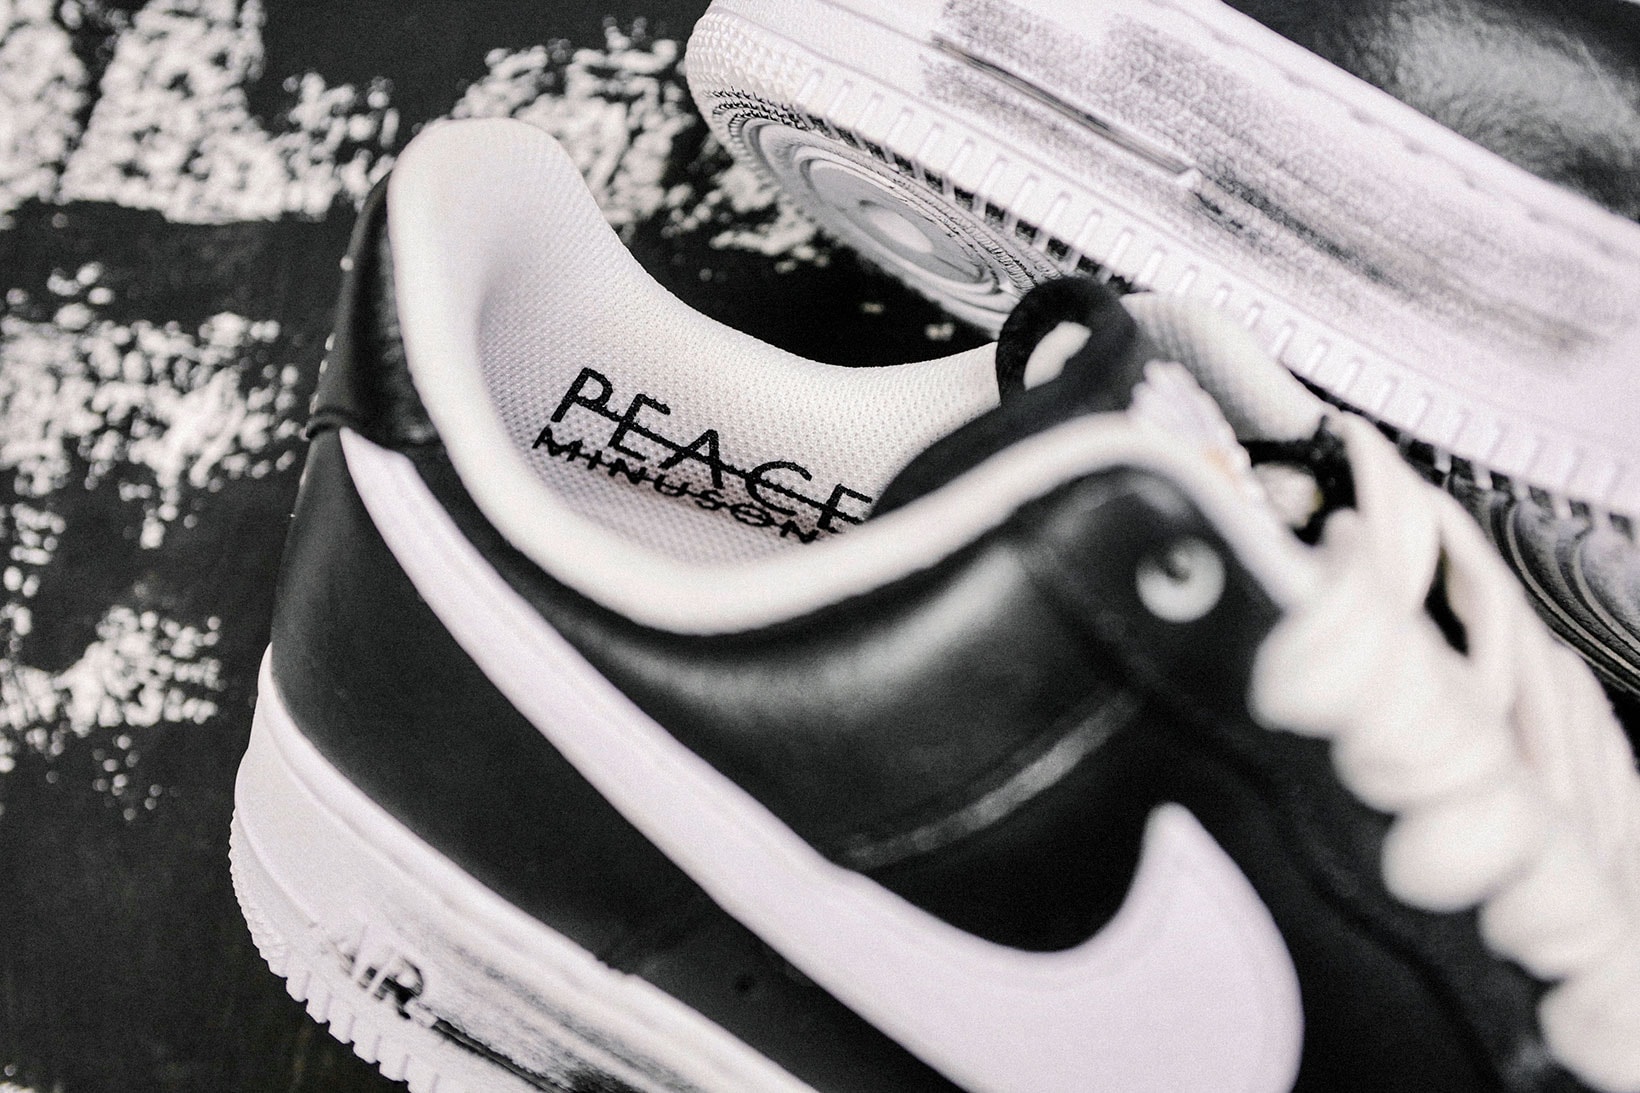 g dragon peaceminusone nike air force 1 07 paranoise sneakers collaboration black white shoes footwear sneakerhead